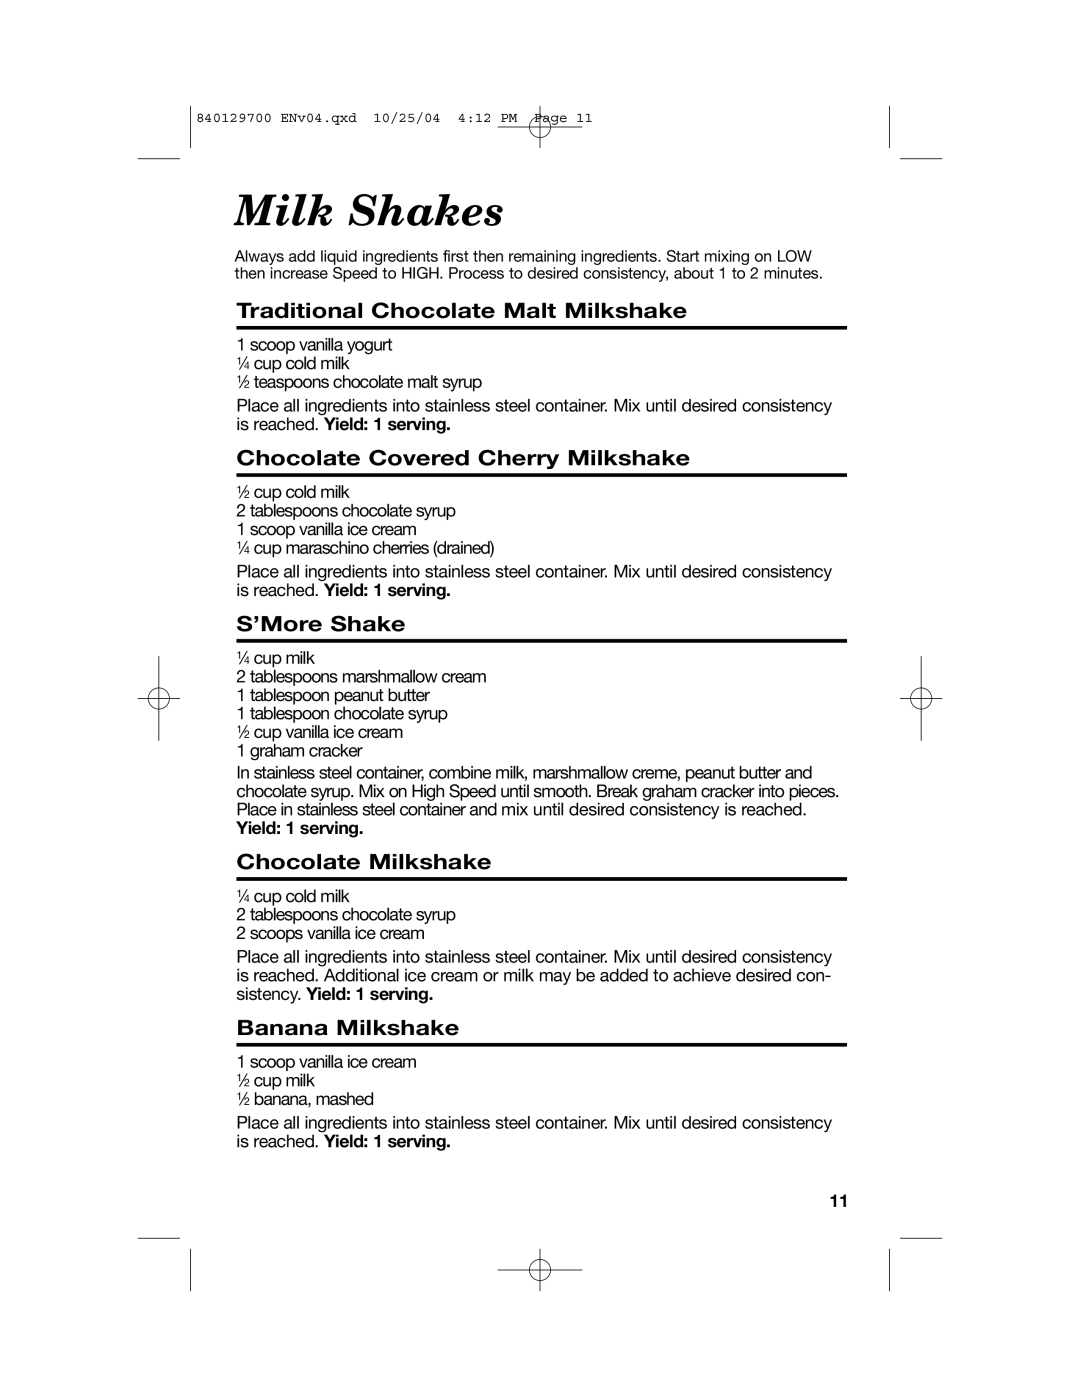 Hamilton Beach Drink Mixer manual Milk Shakes, Traditional Chocolate Malt Milkshake, Chocolate Covered Cherry Milkshake 